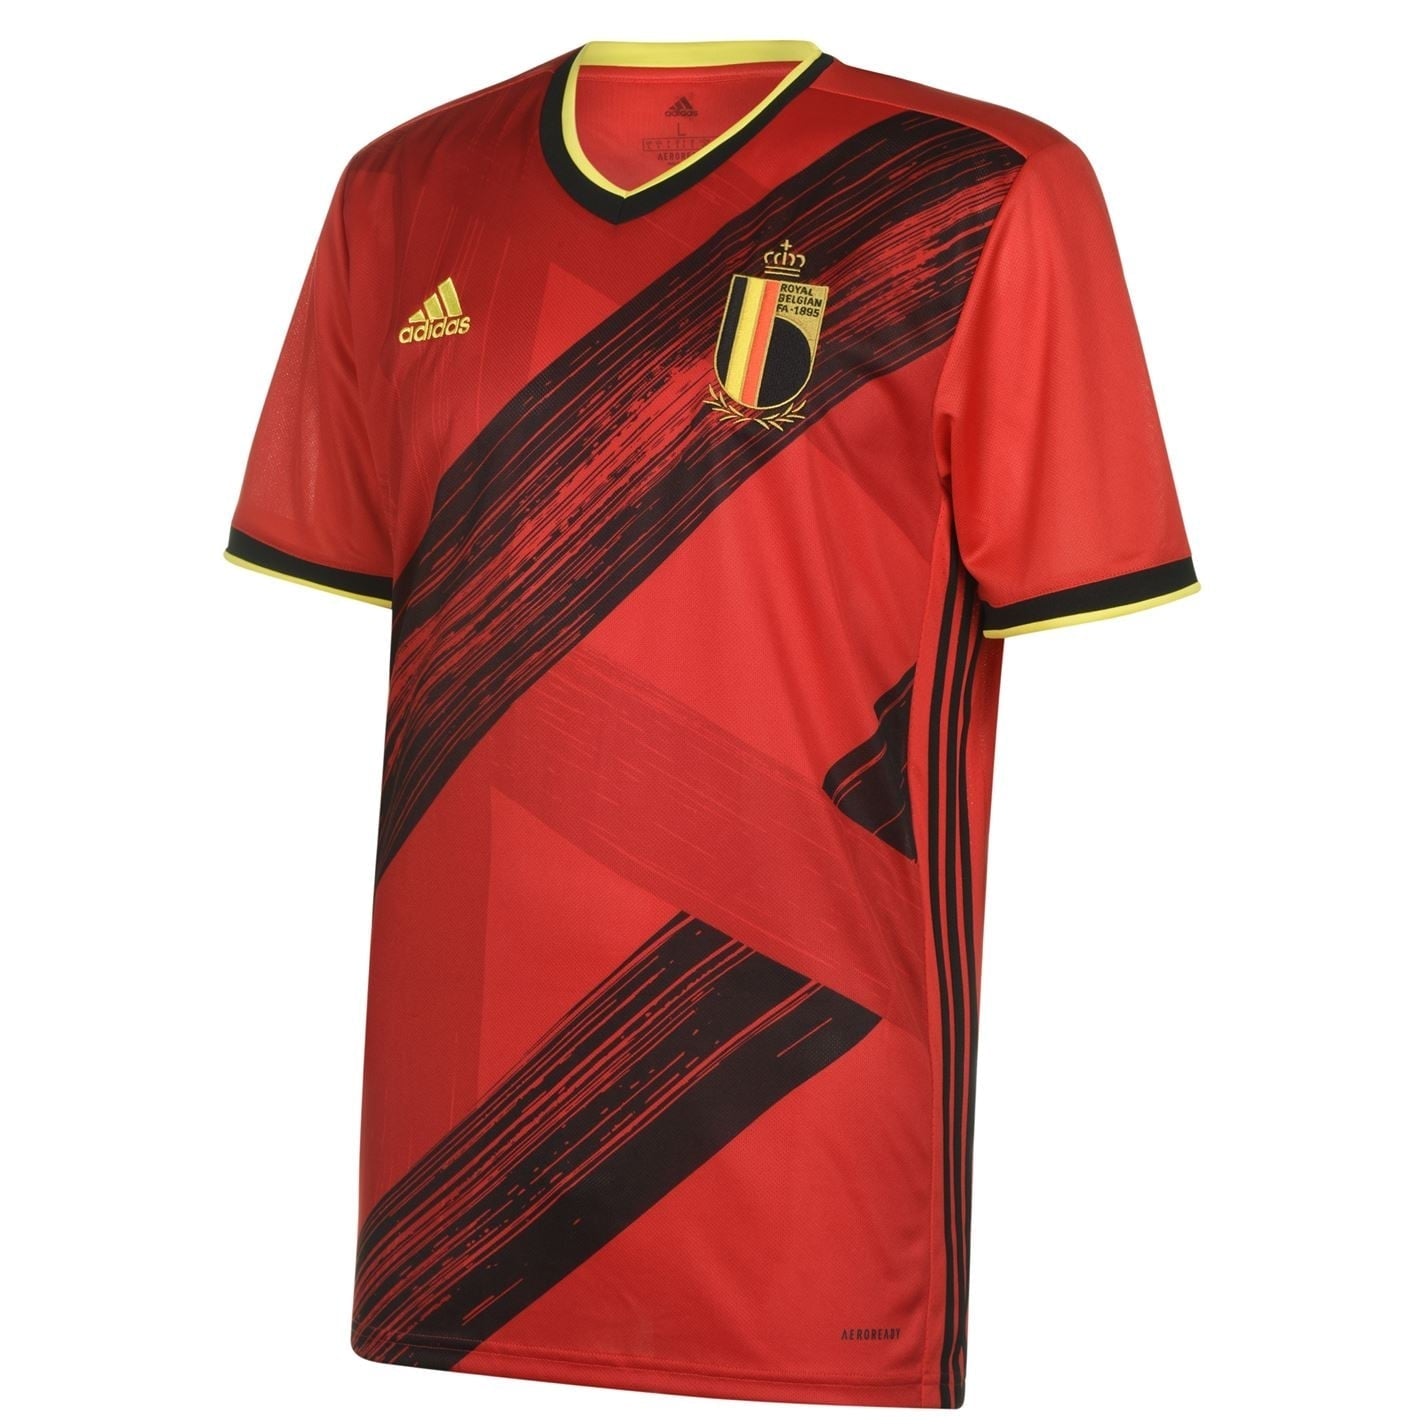 Belgium Home Shirt 2020 - Red